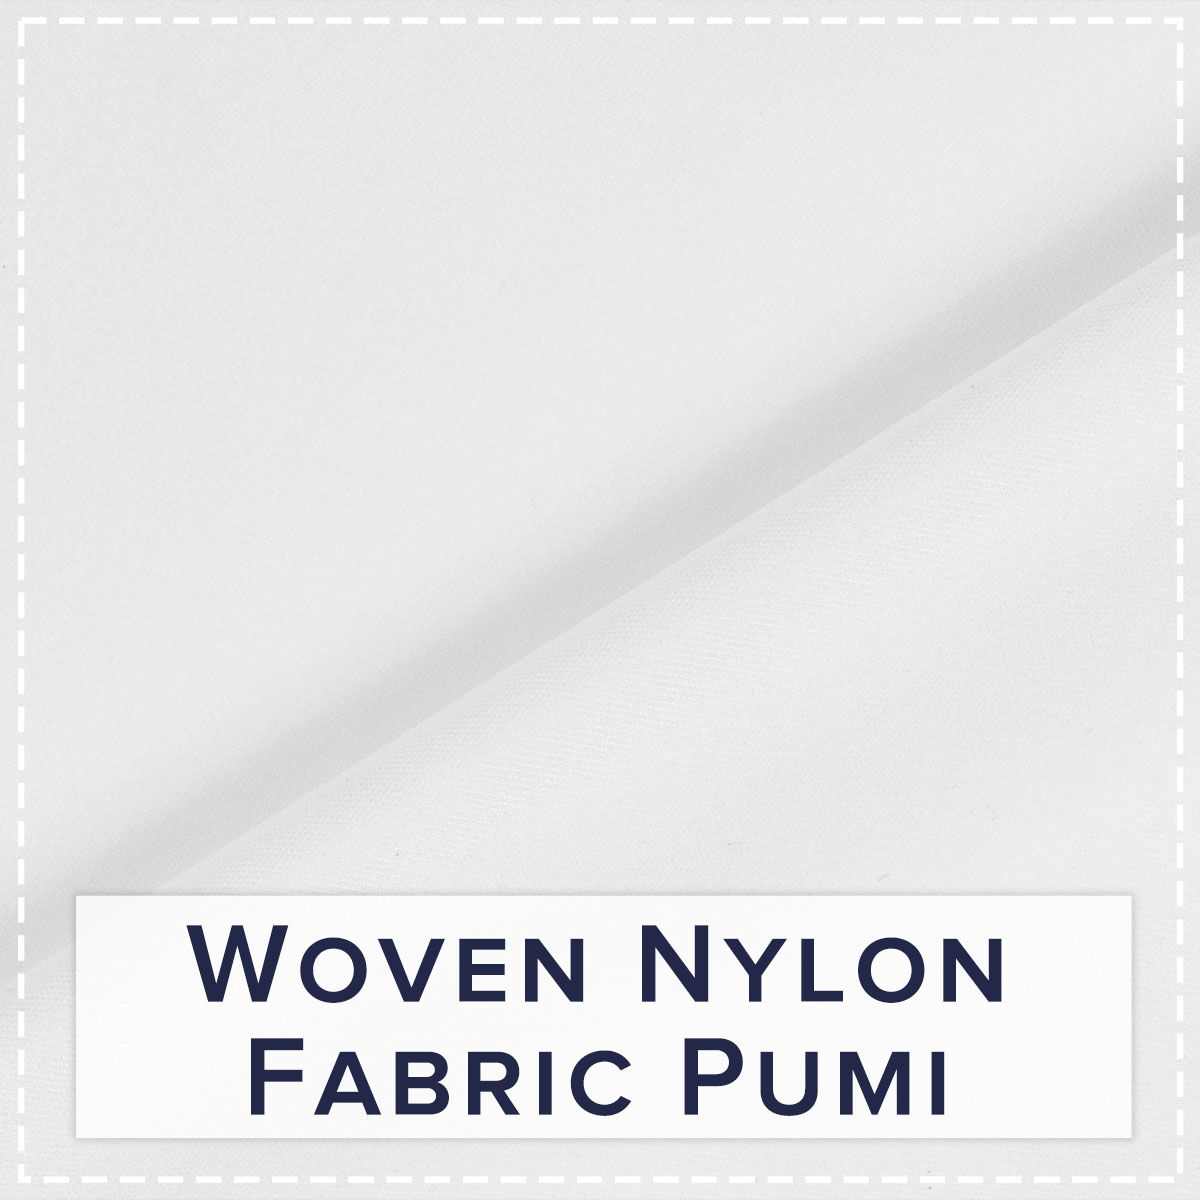 Woven Nylon Fabric Pumi